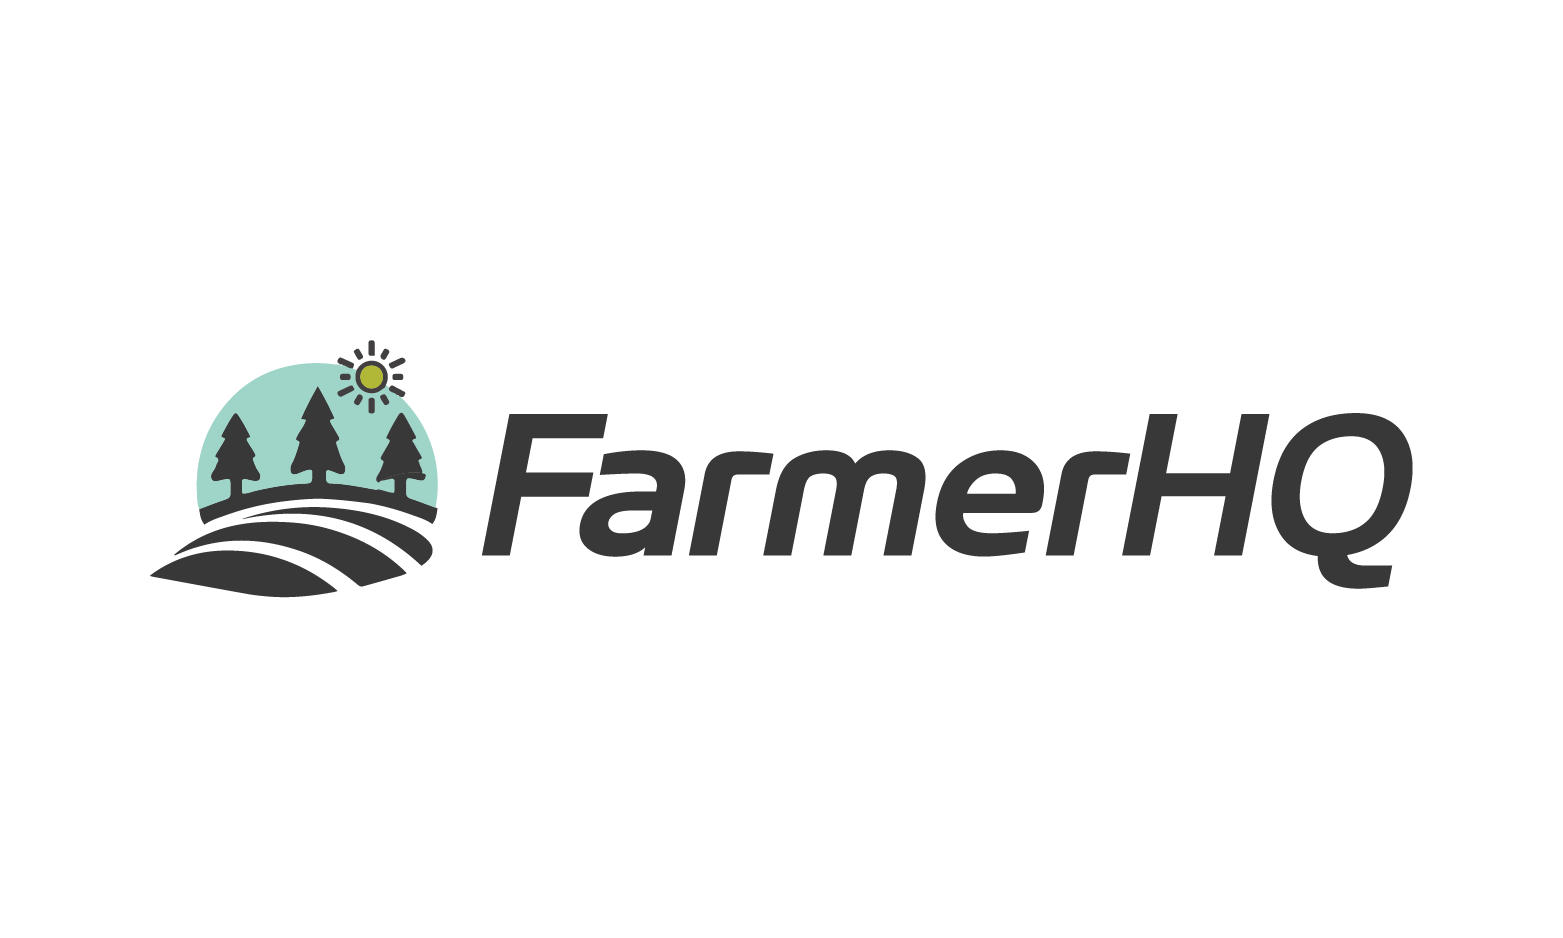 FarmerHQ.com - Creative brandable domain for sale